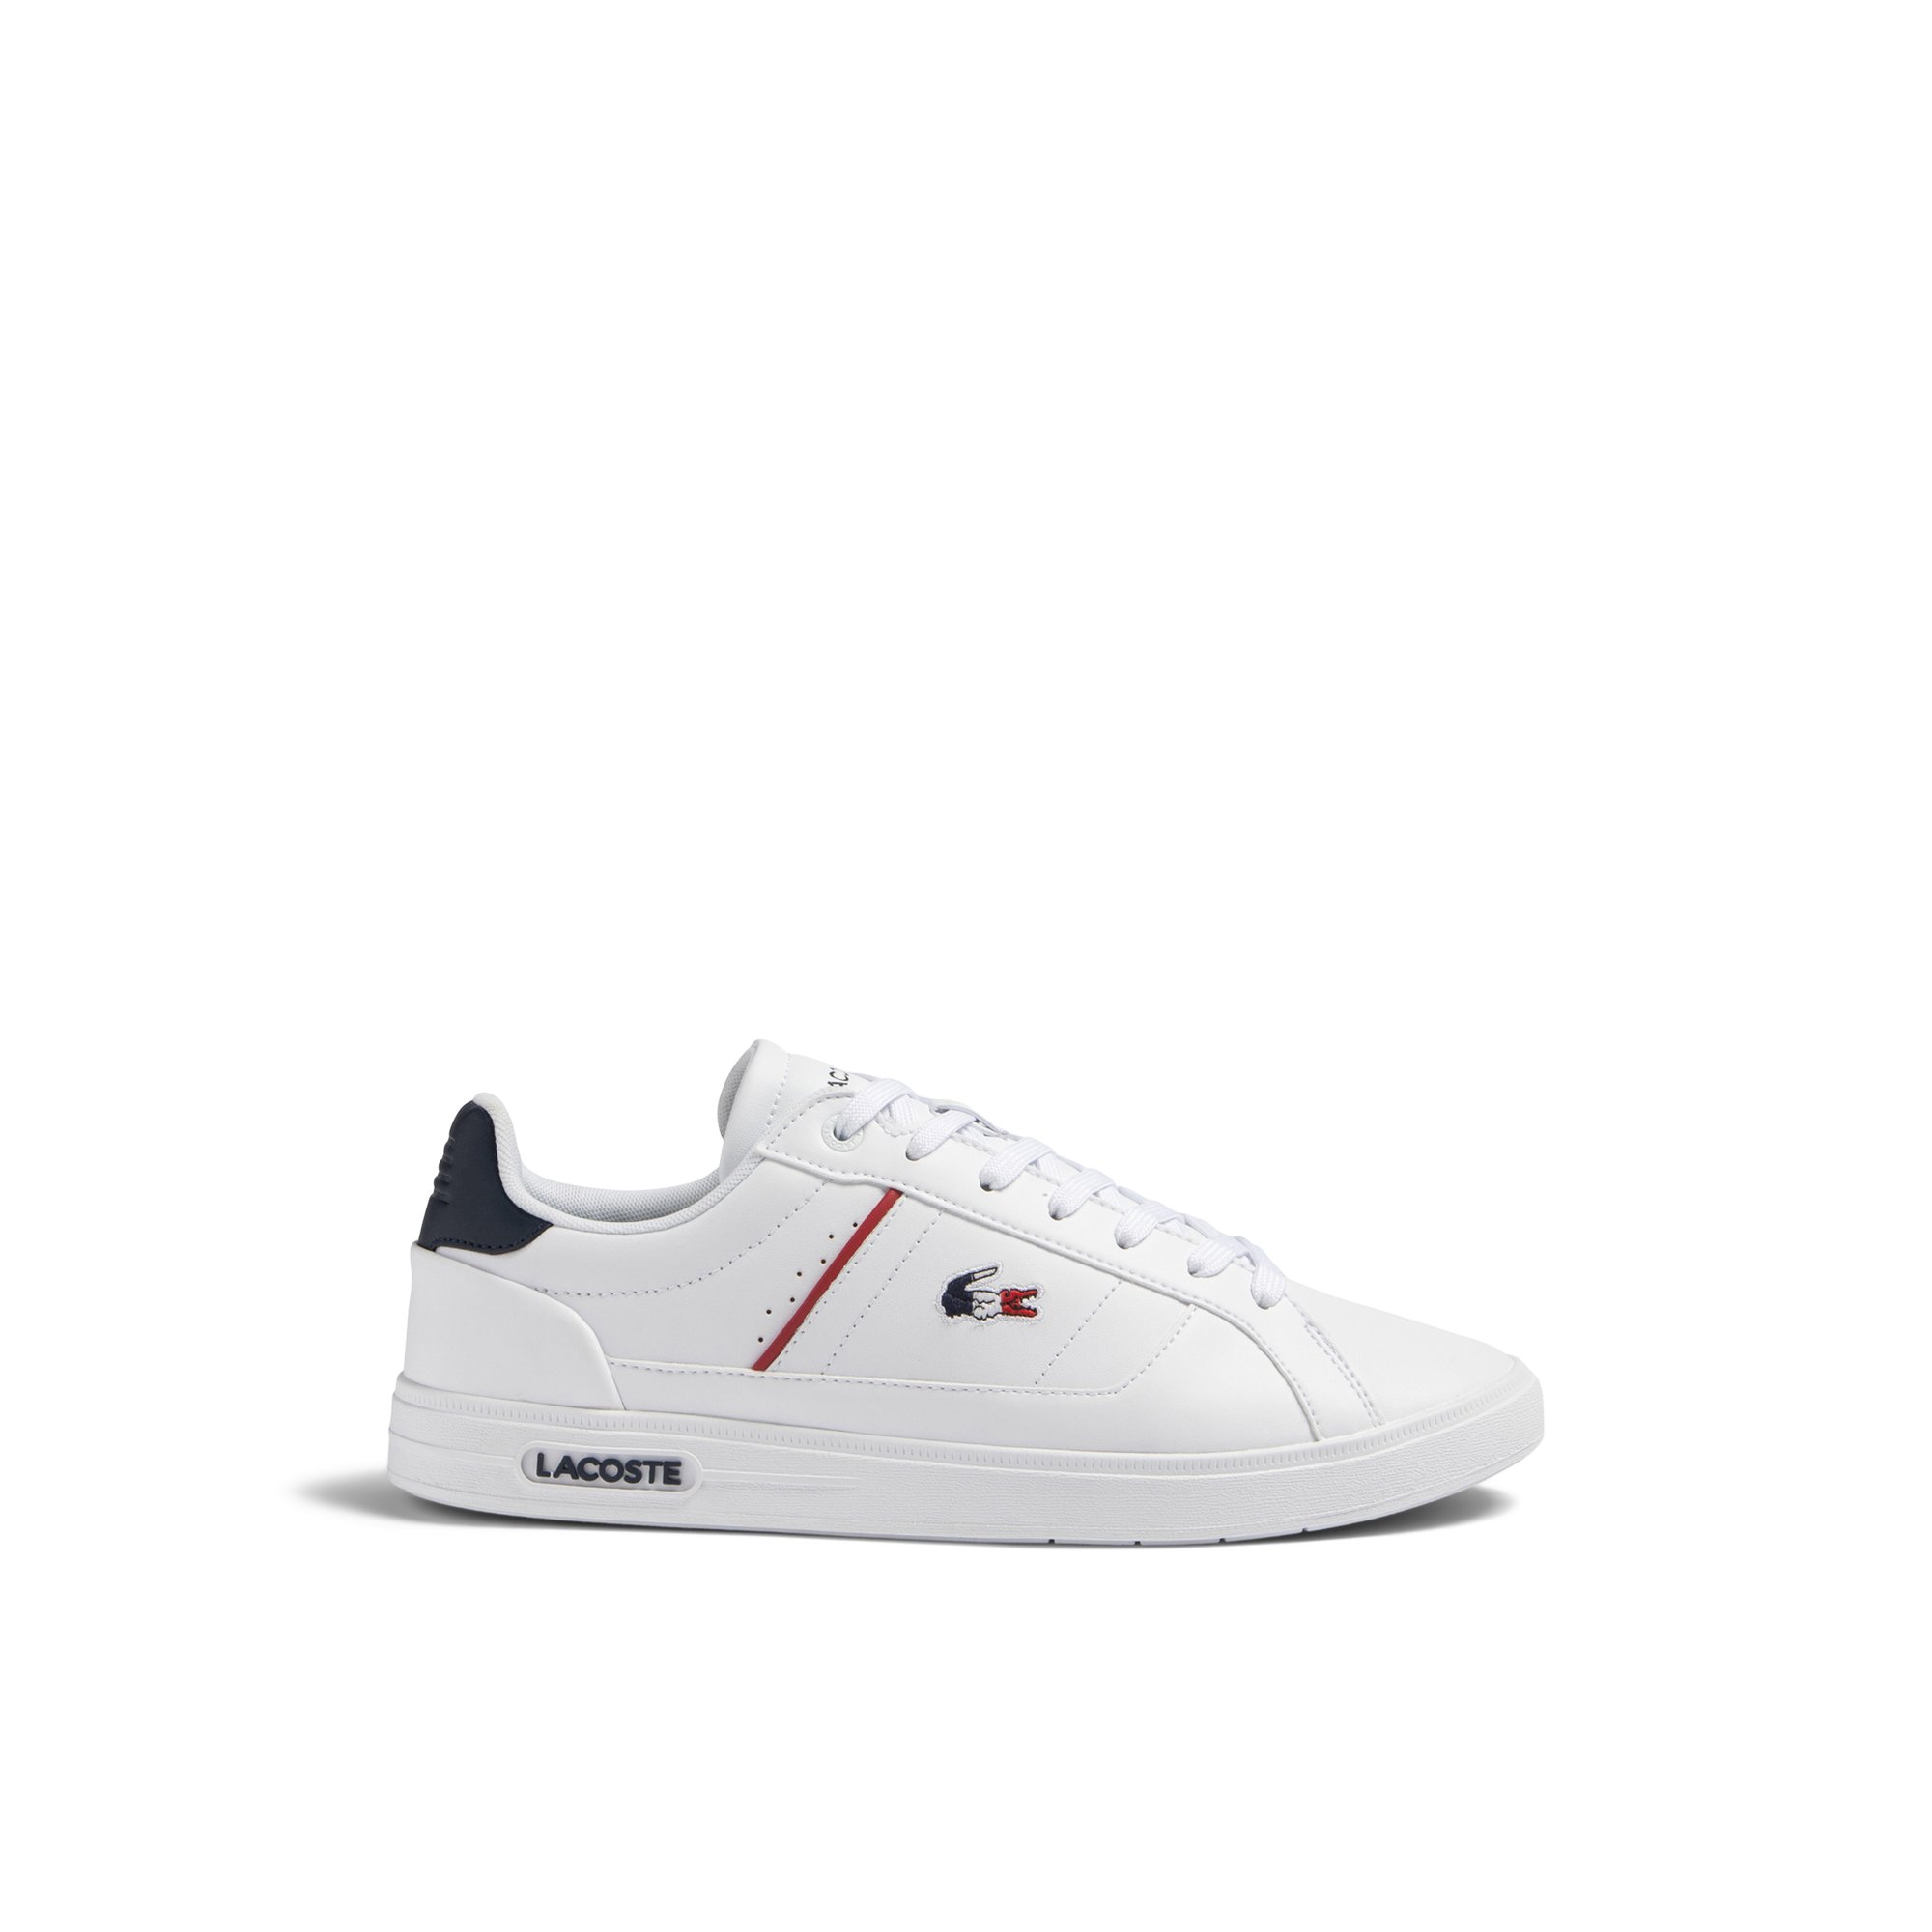 Lacoste Europa Pro - Men's White Sneakers